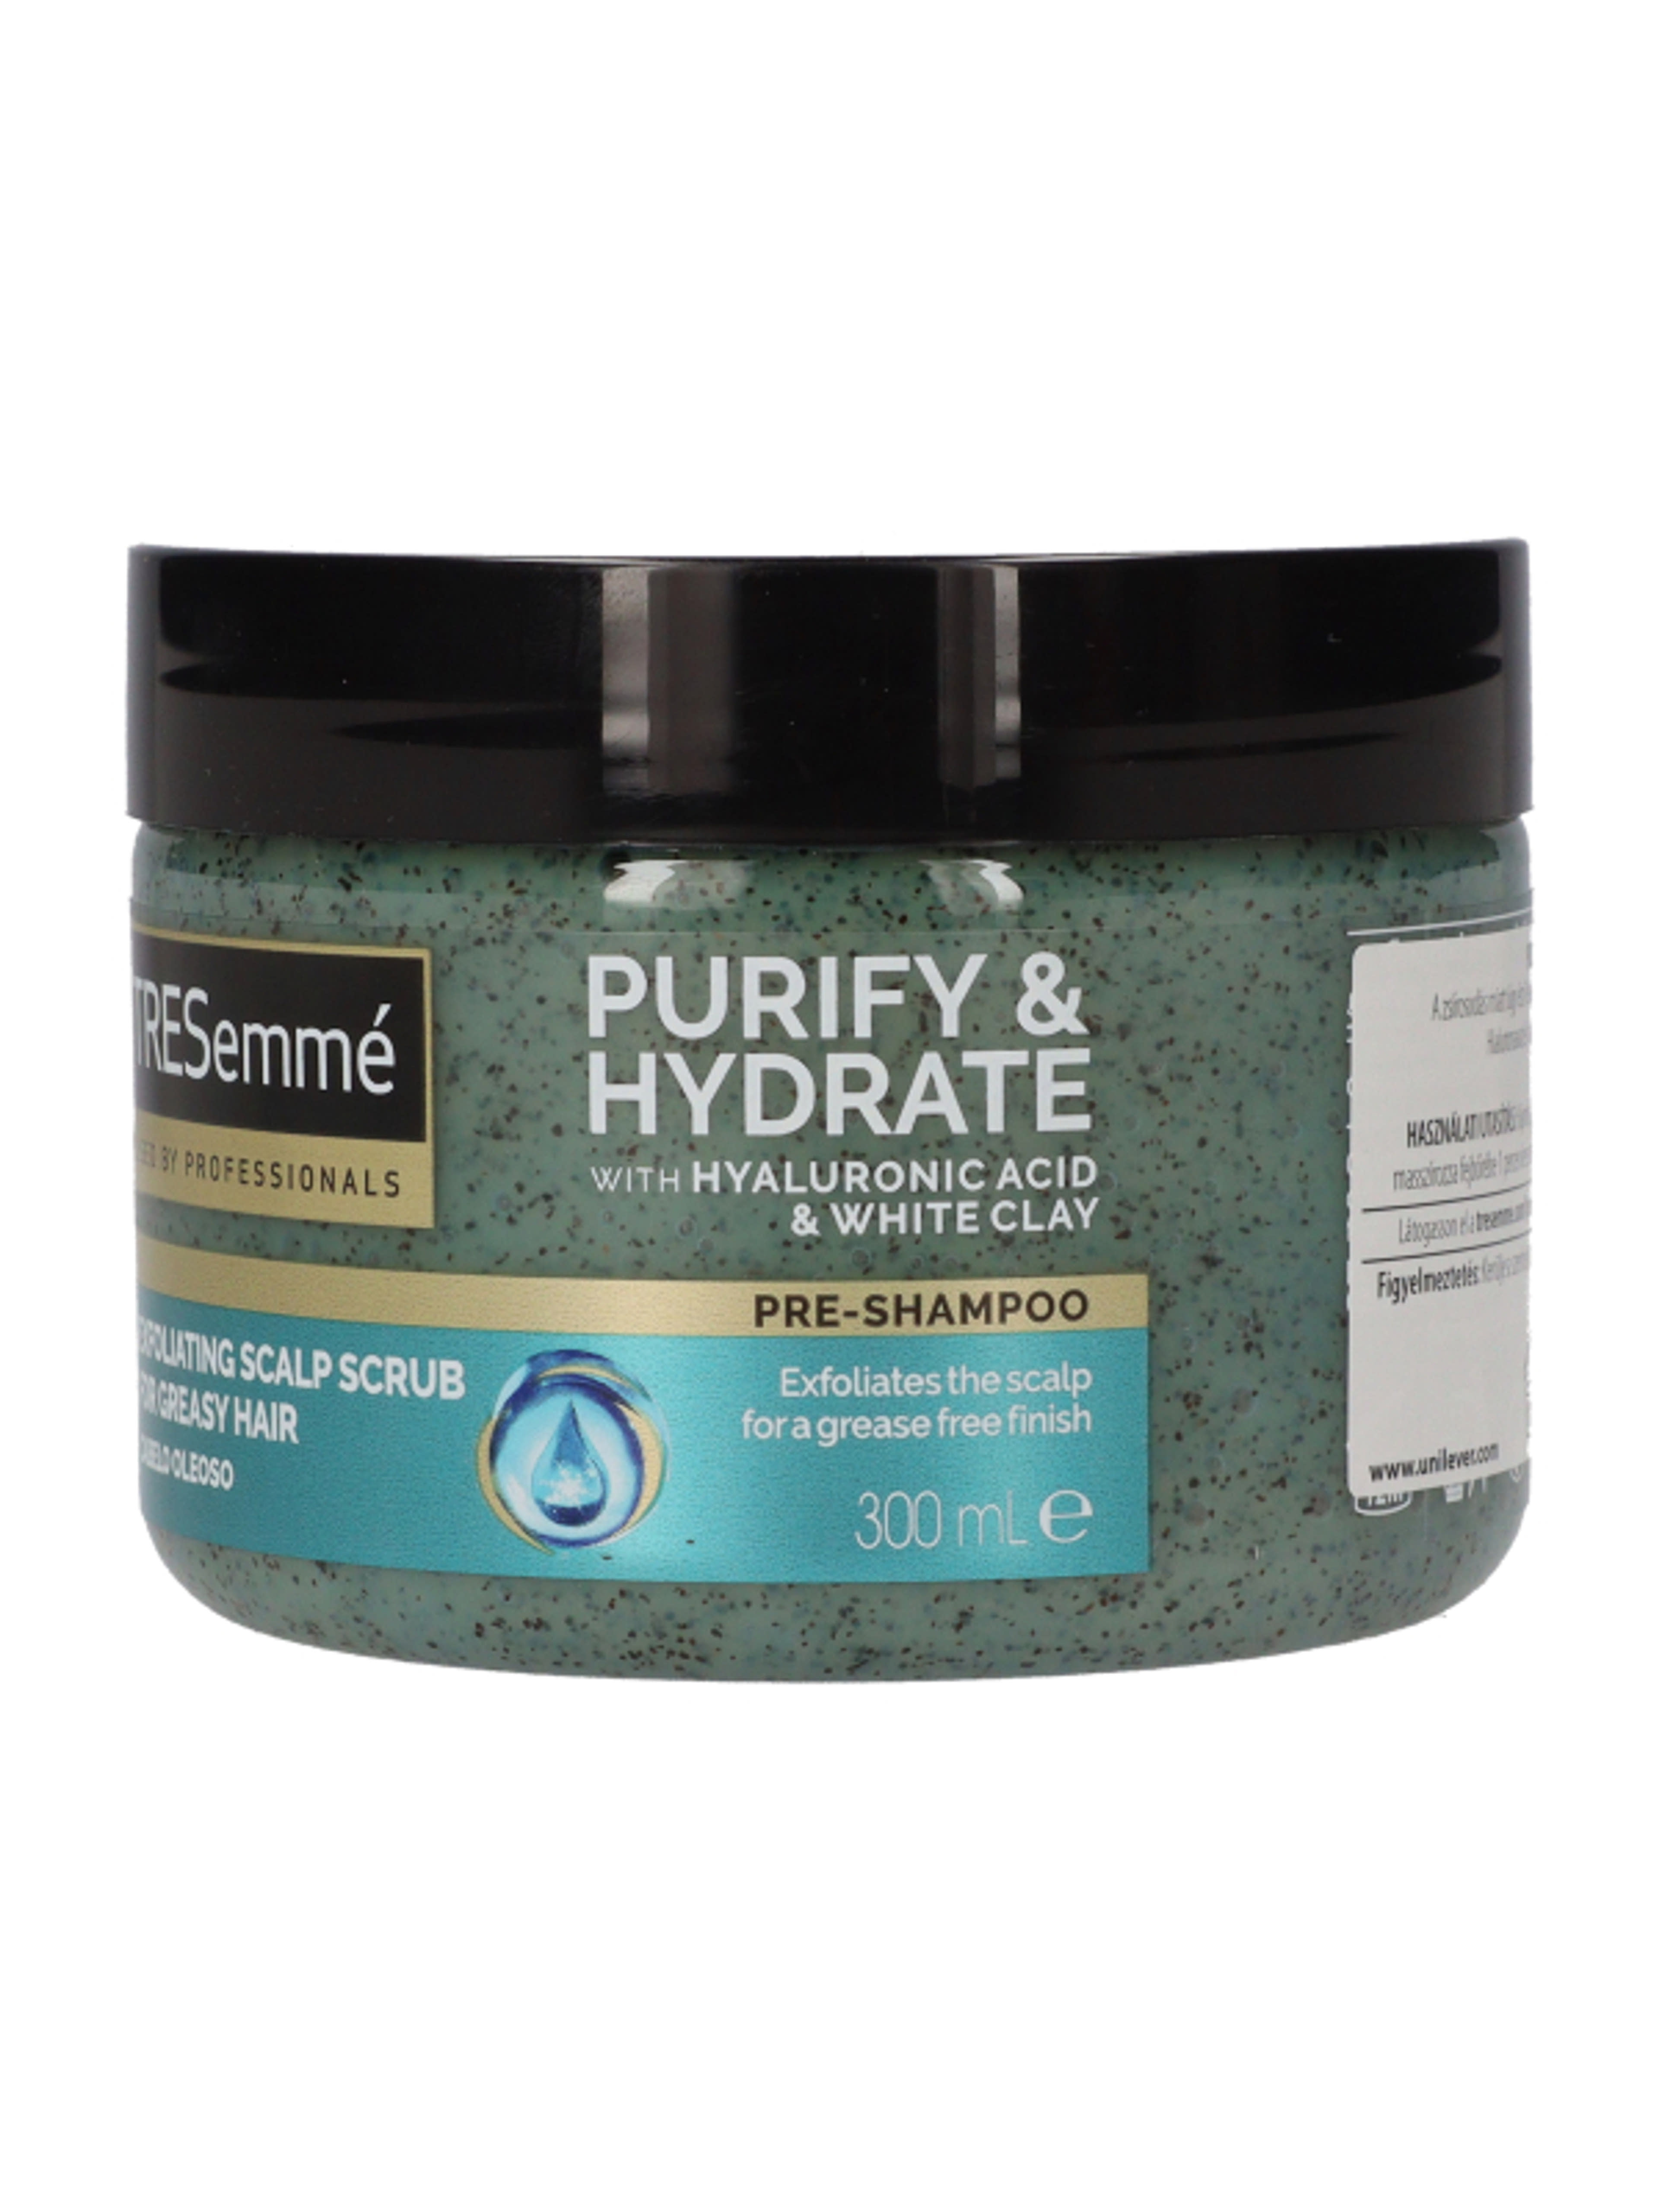 Tresemme purify & hydrate fejbőr radír - 300 ml-3